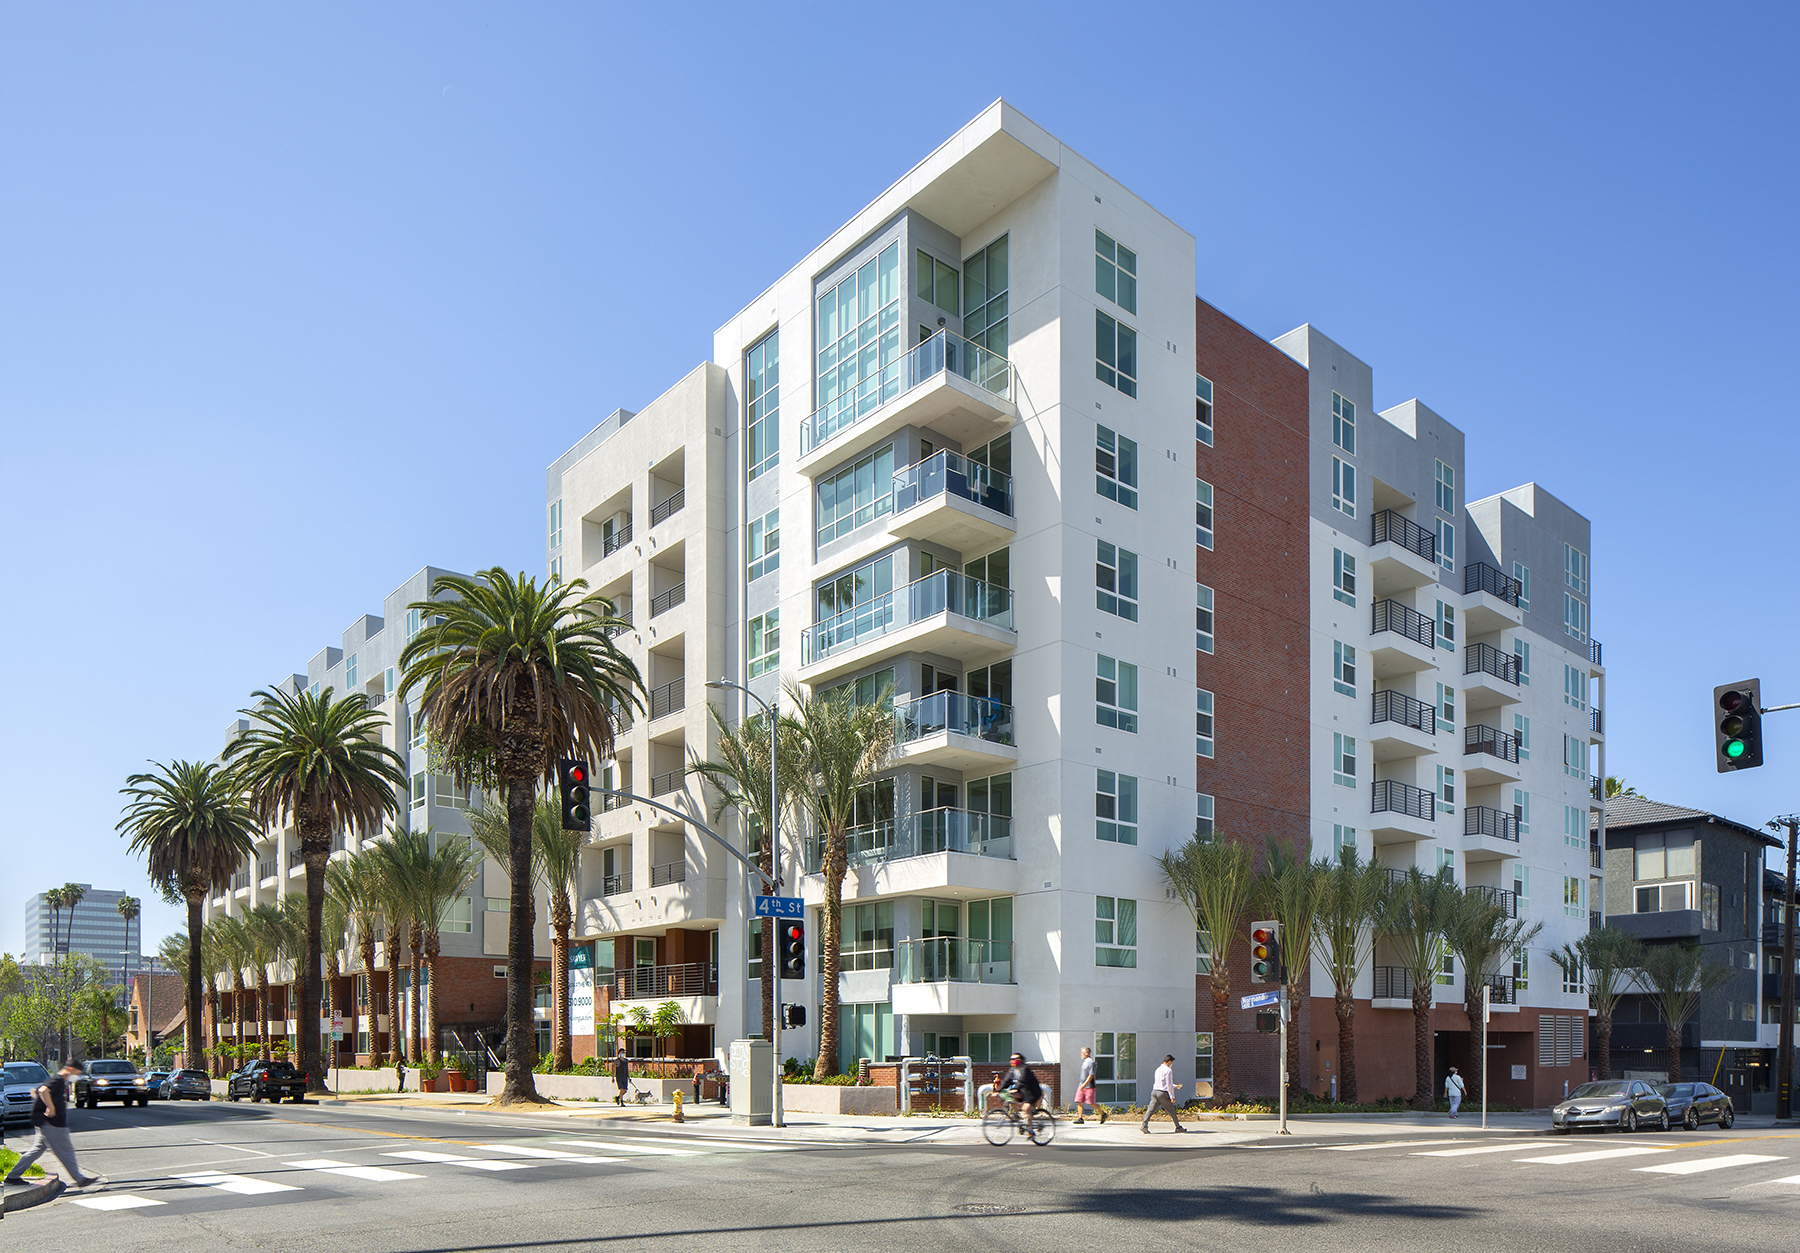 2 Sawyer apartments LA, 9 noteworthy multifamily developments for 2022, Jim Simmons.jpg